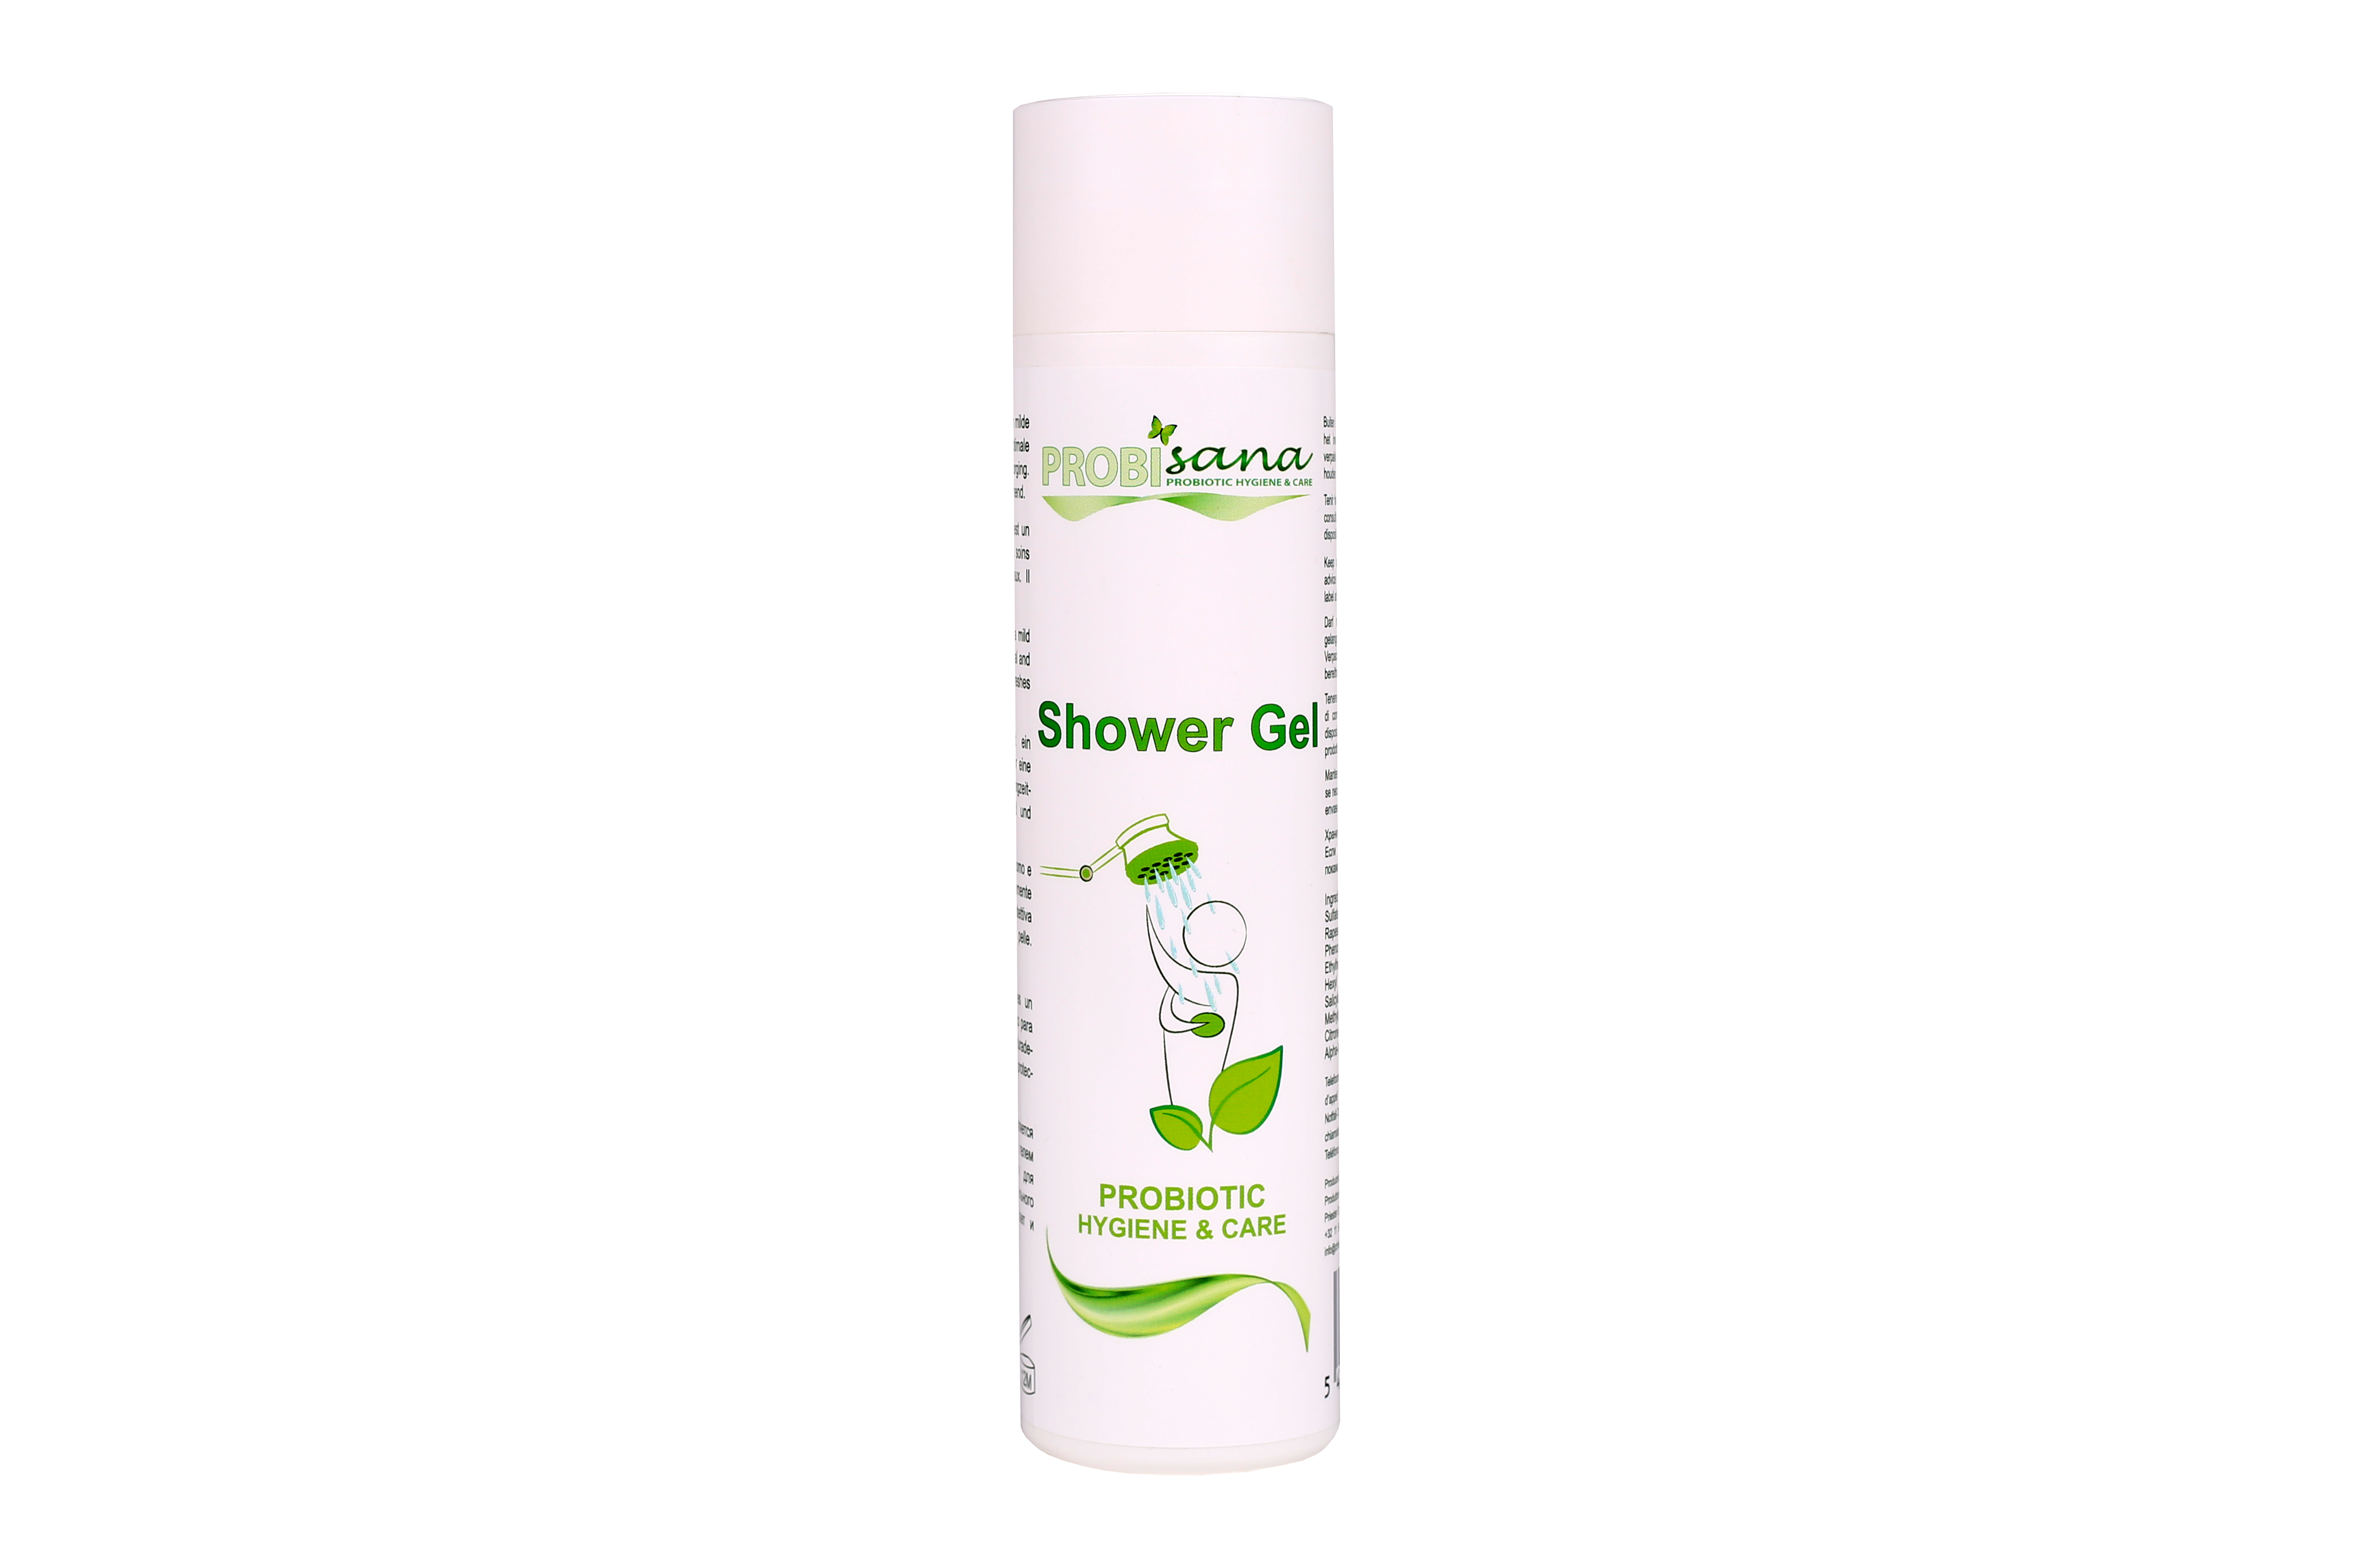 60550 Probisana Shower Gel